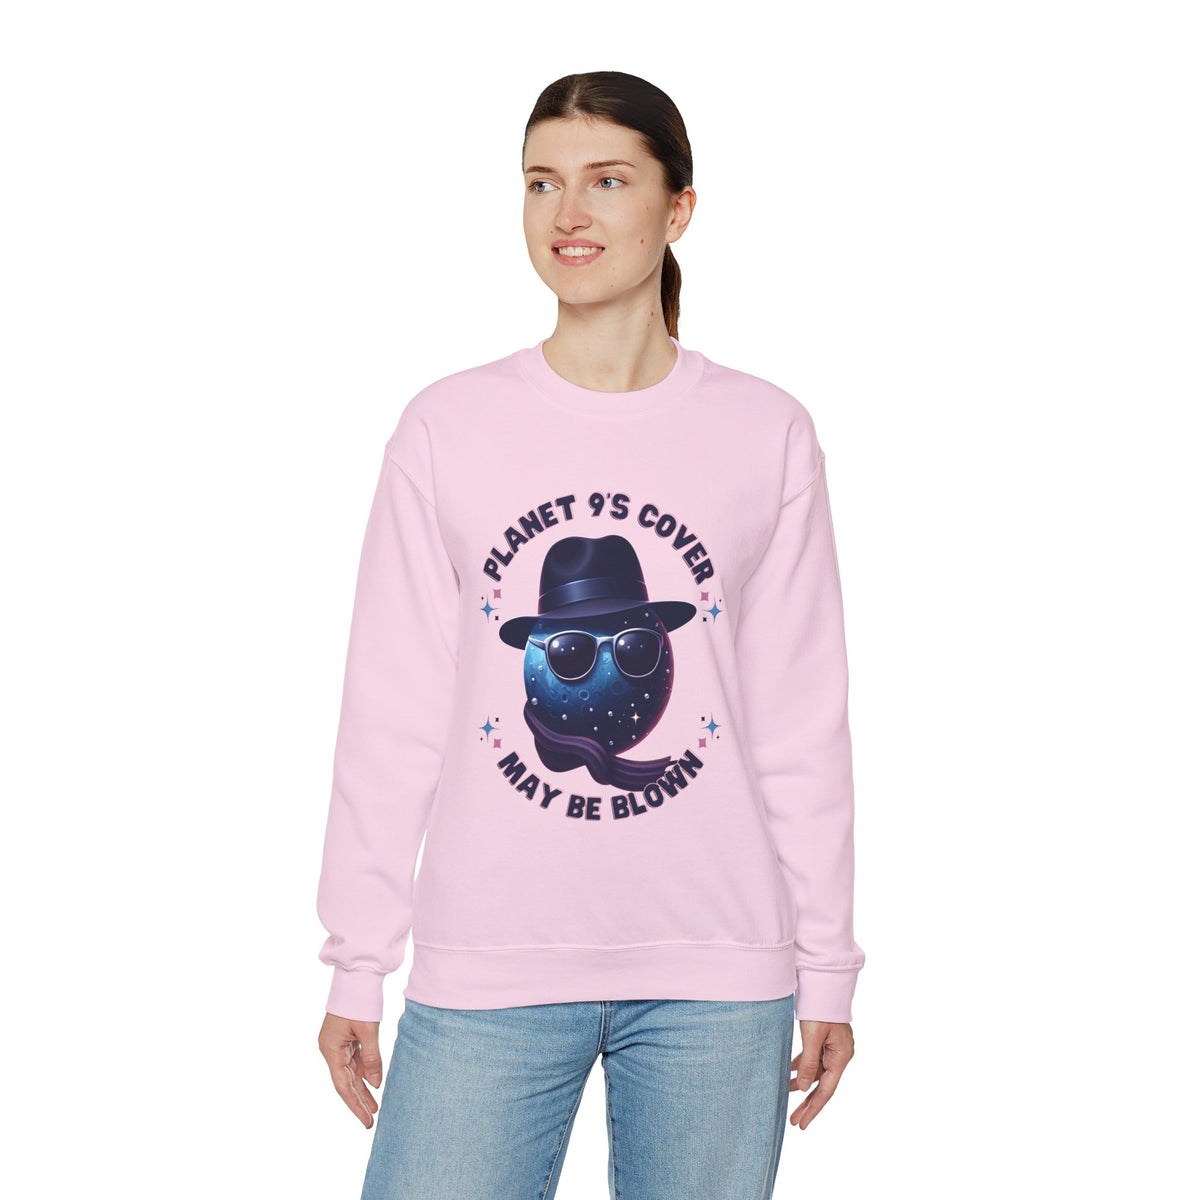 Funny Planet 9 Solar System Shirt | Science Shirt | Astronomy Gift  | Unisex Crewneck Sweatshirt